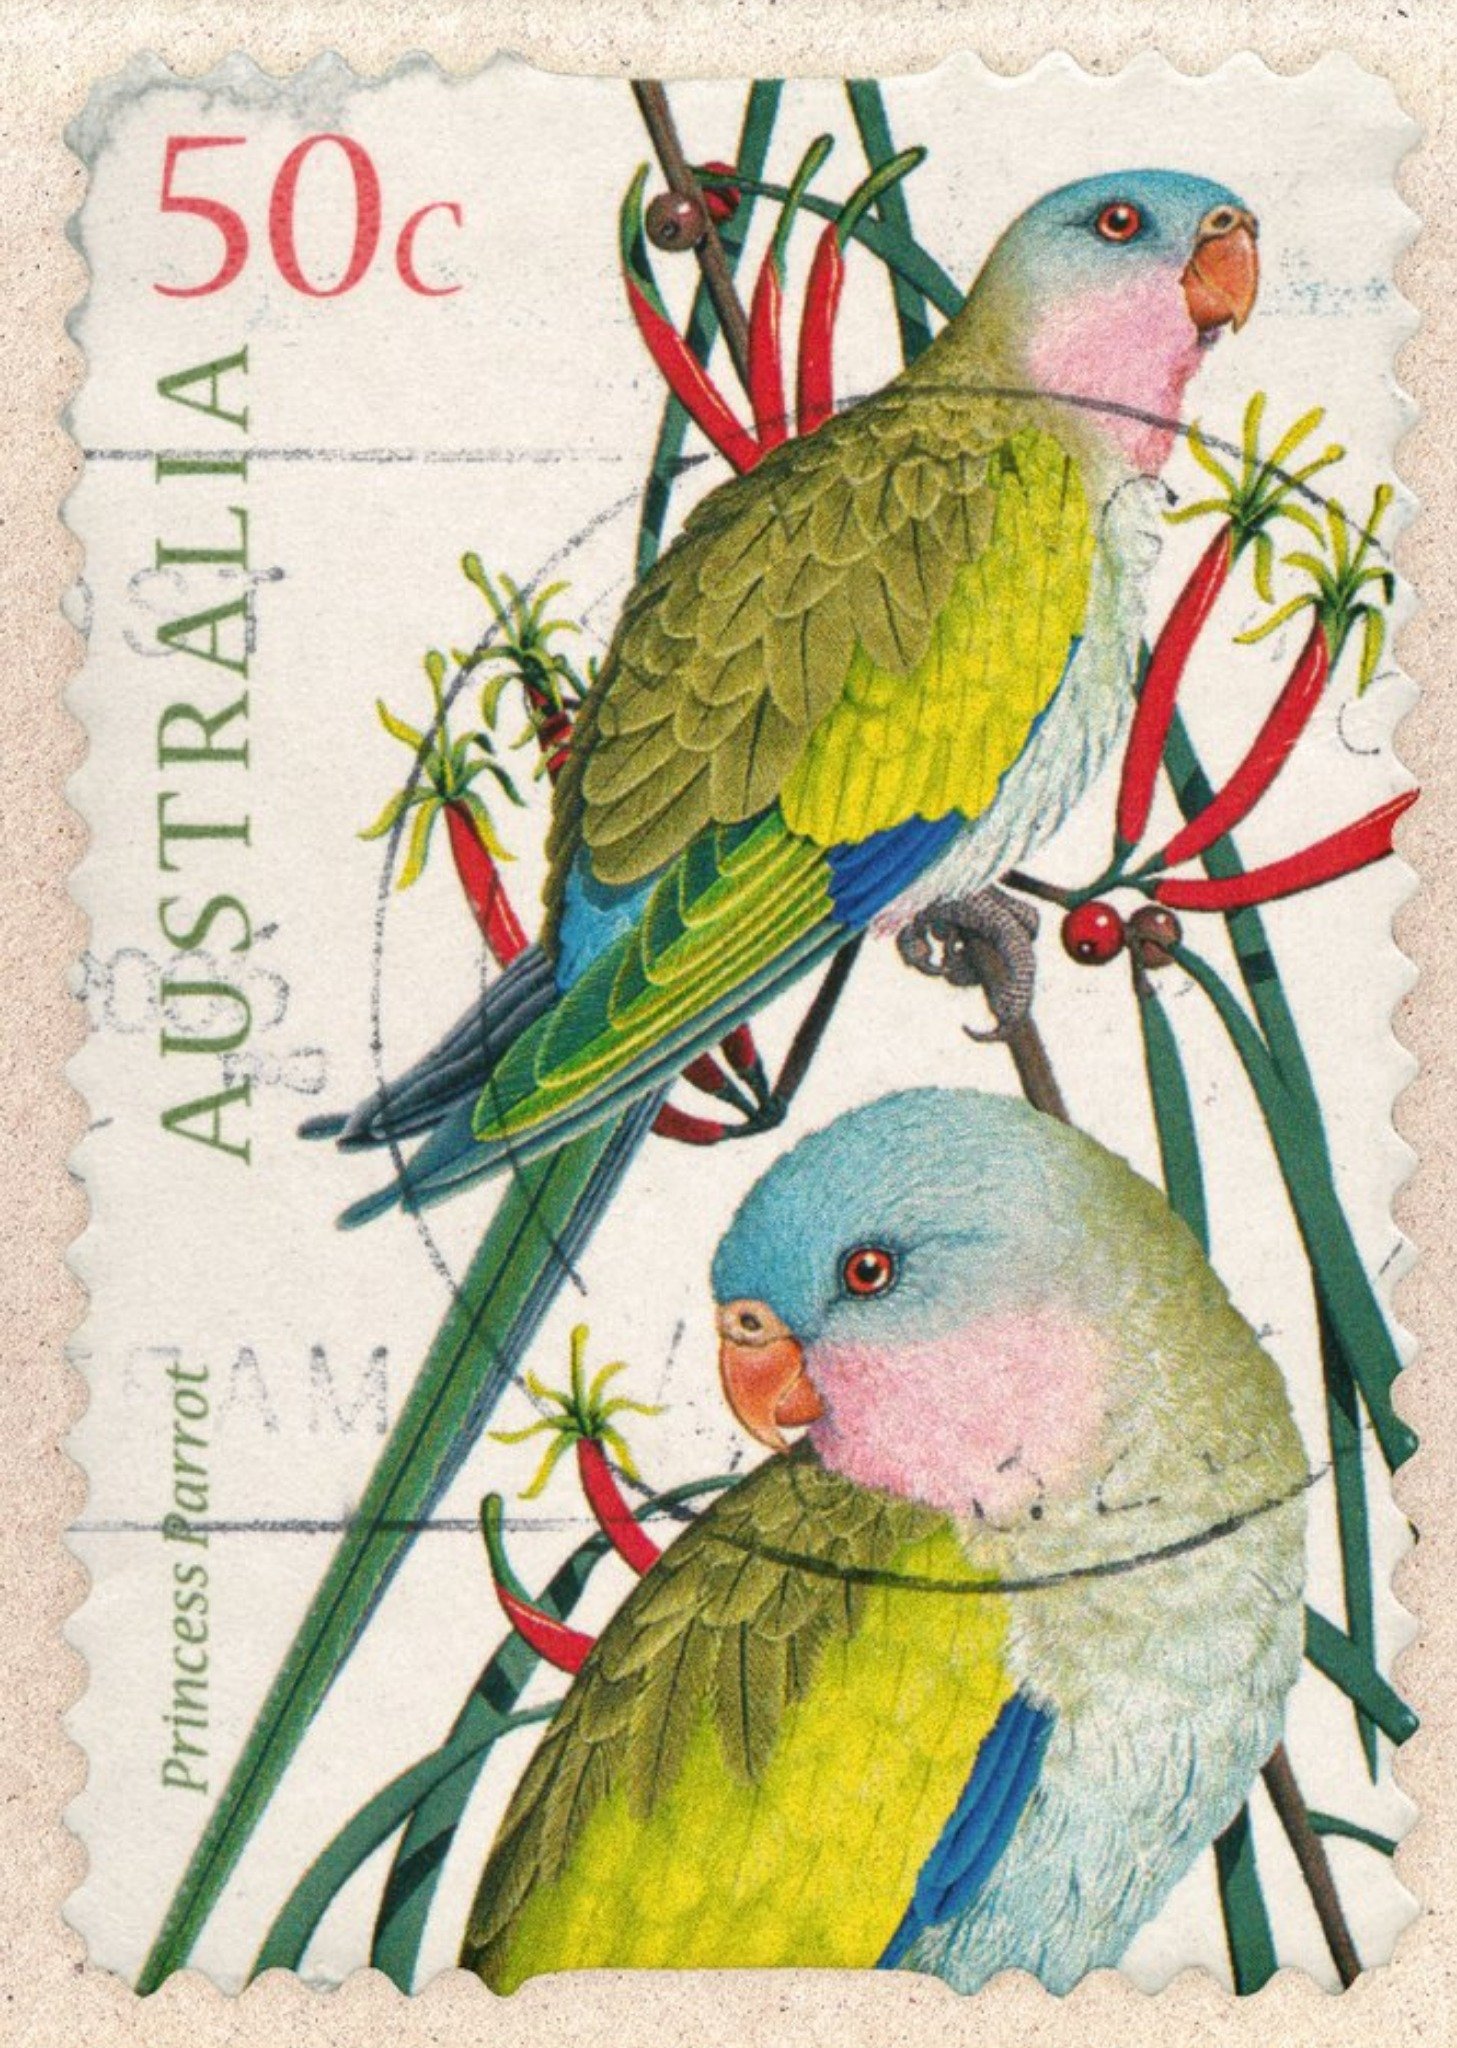 Moonpig Colourful Bird Stamp Card, Large